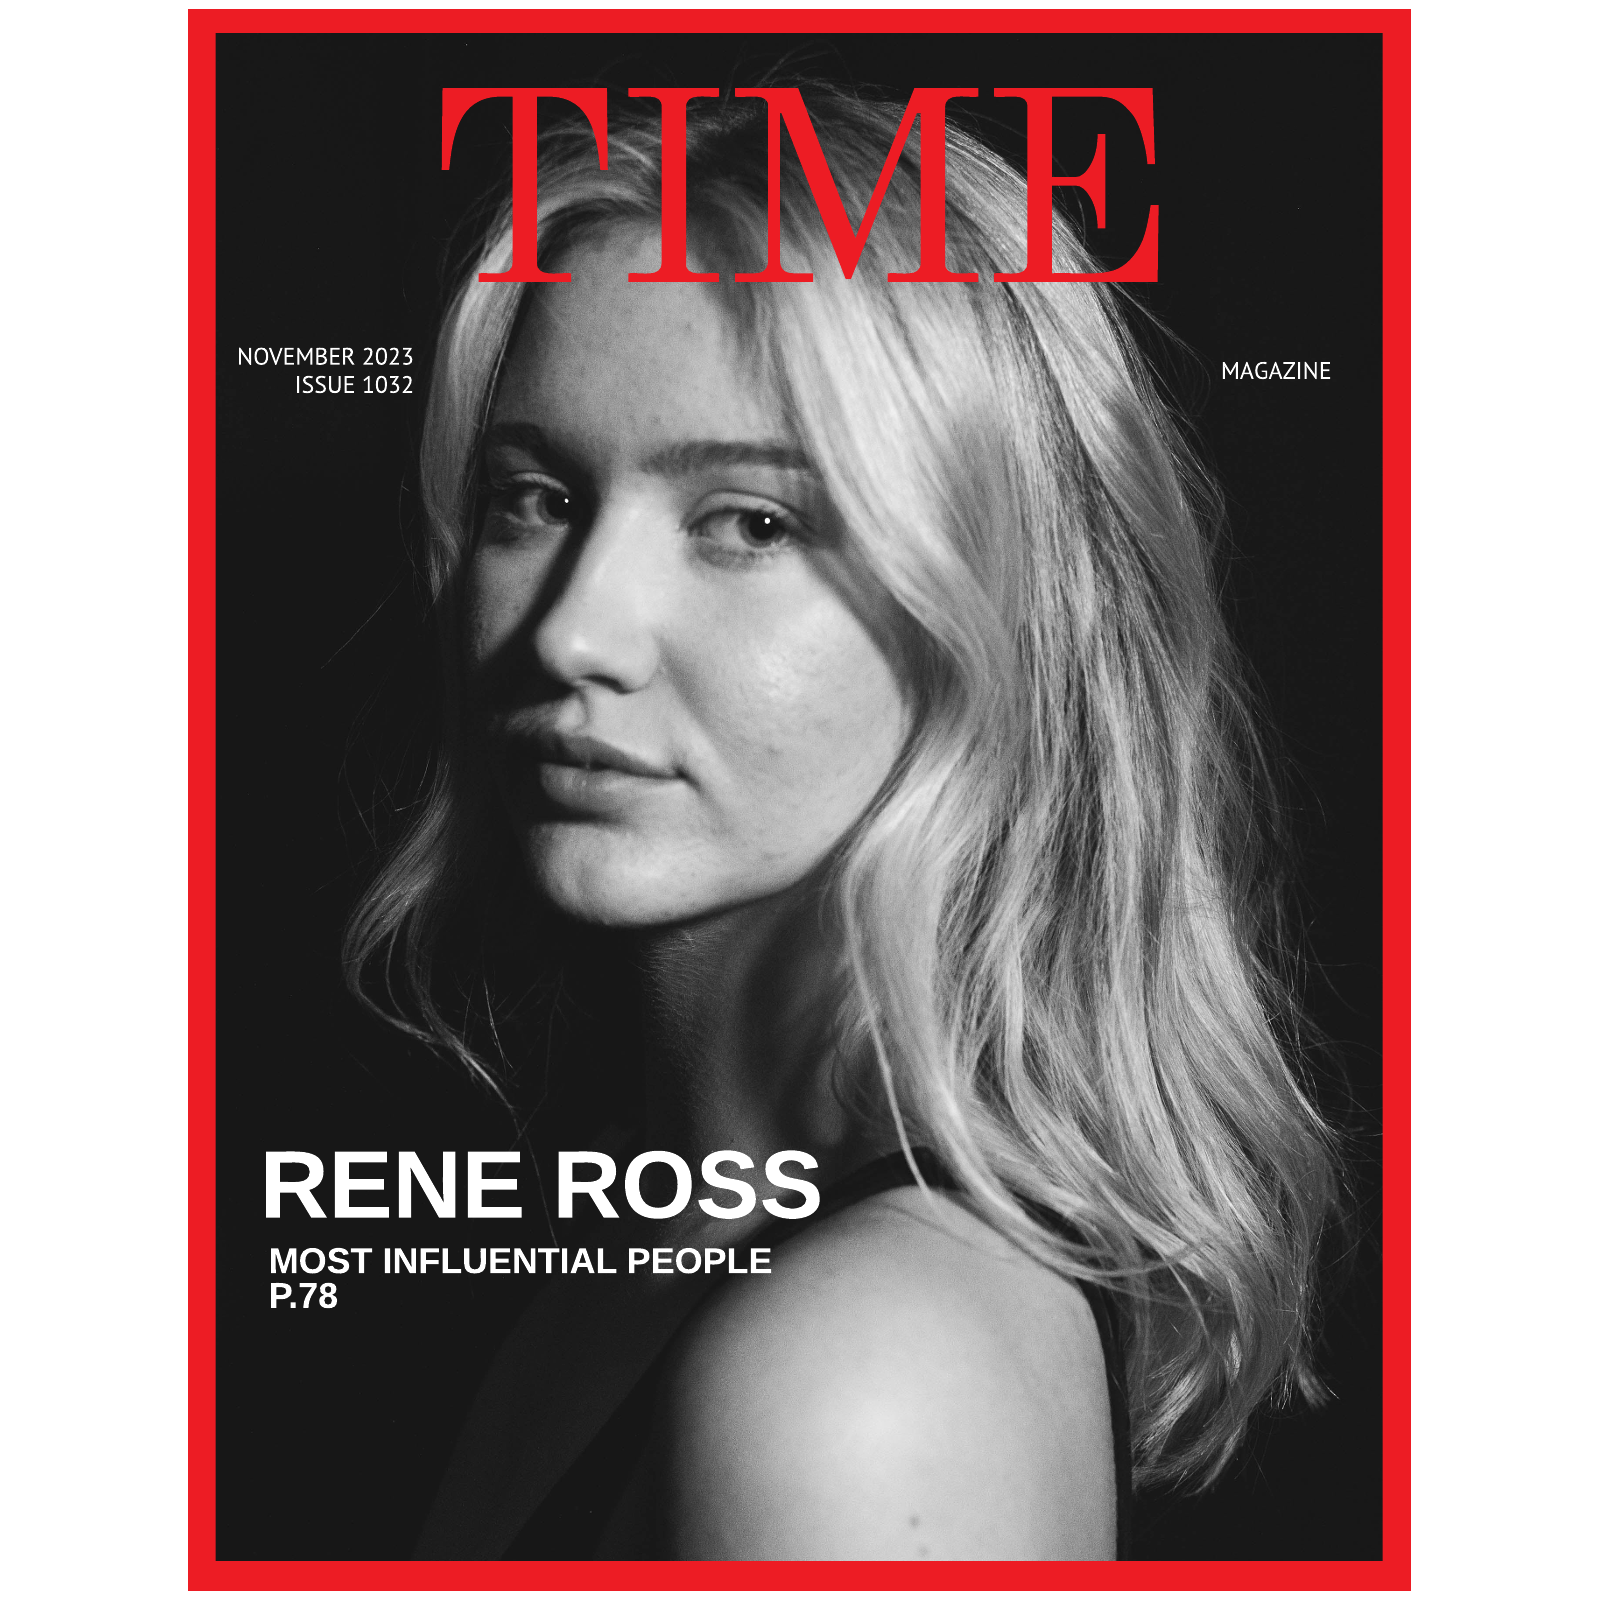 TIME Magazine example